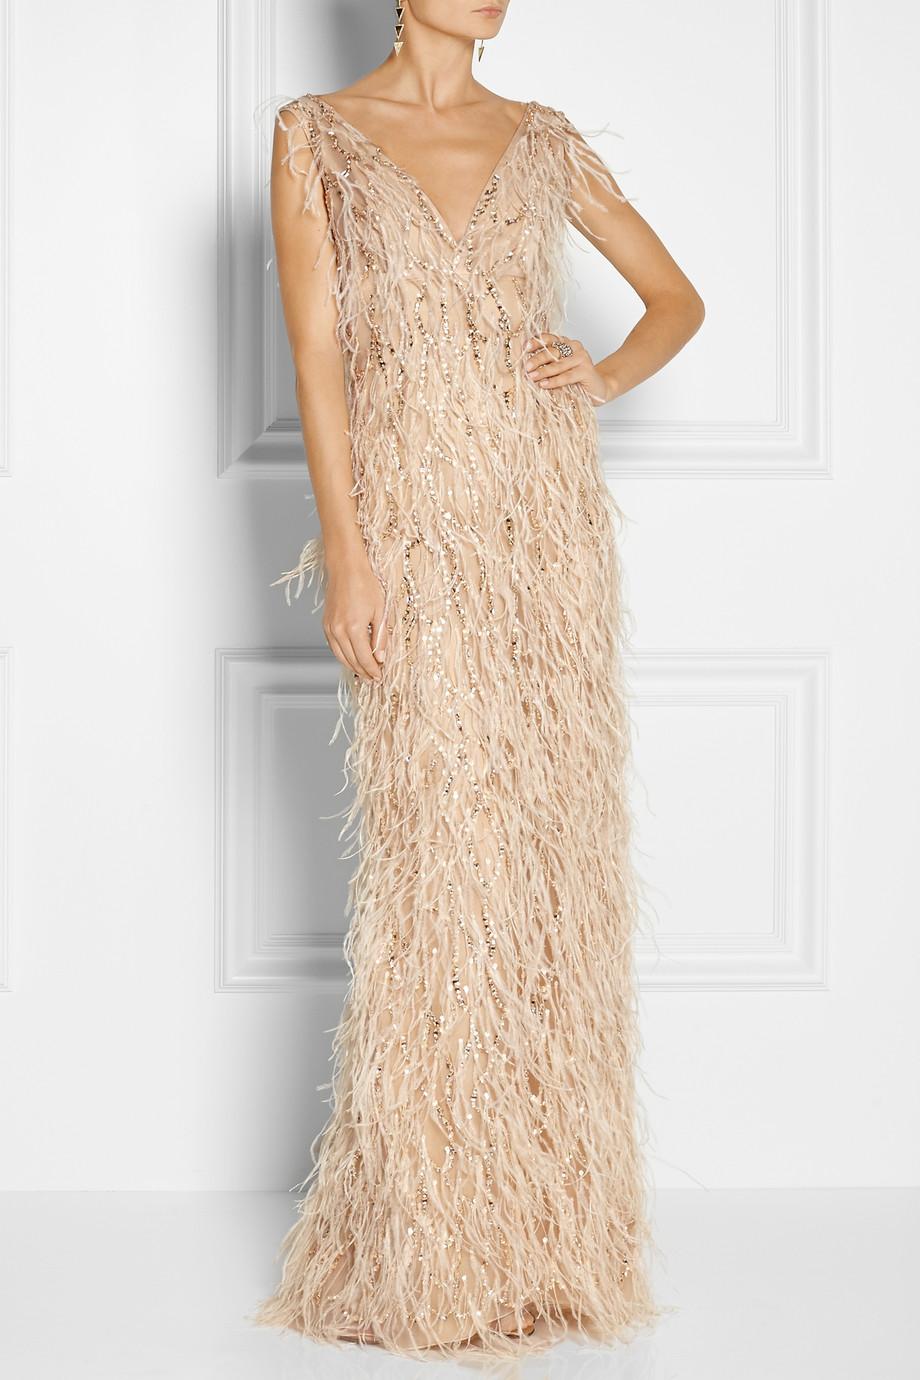 New Museum Oscar De La Renta Ostrich Feather Crystal-Embellished Tulle Dress 8 For Sale 1